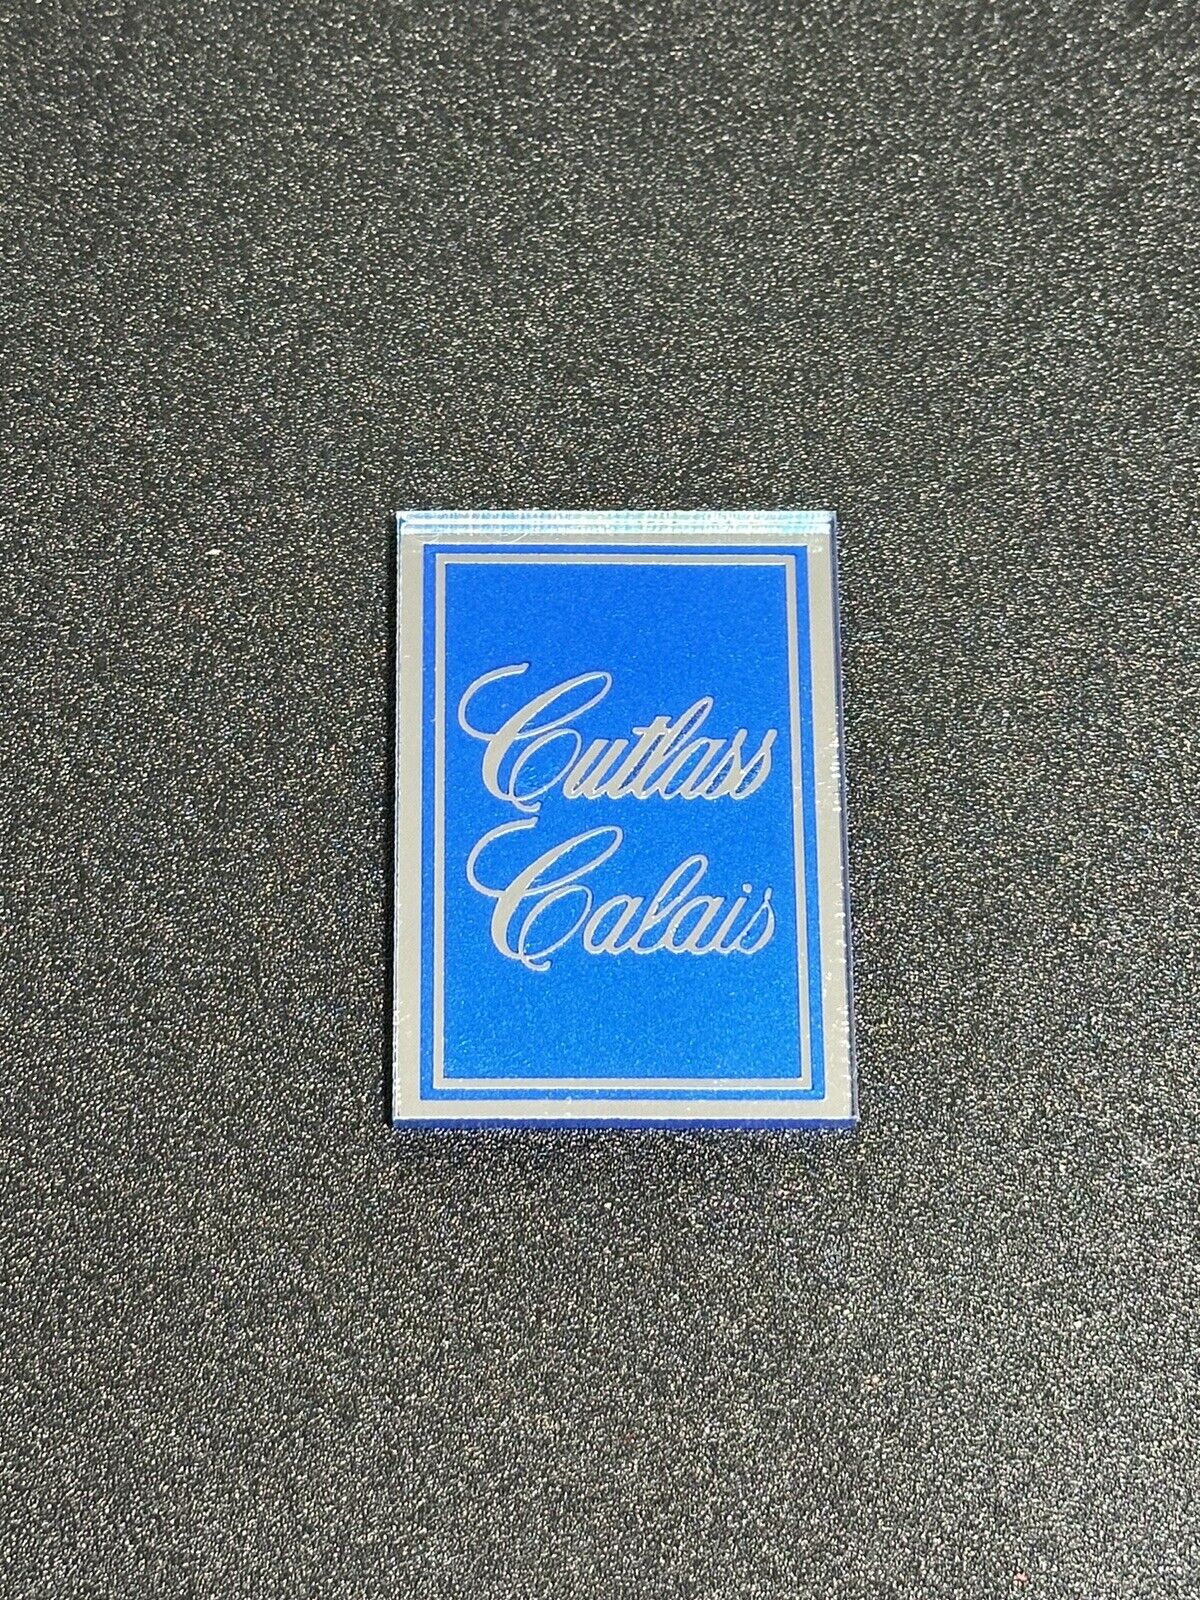 1978 1979 Oldsmobile Cutlass Calais Header Panel Emblem NEW Reproduction